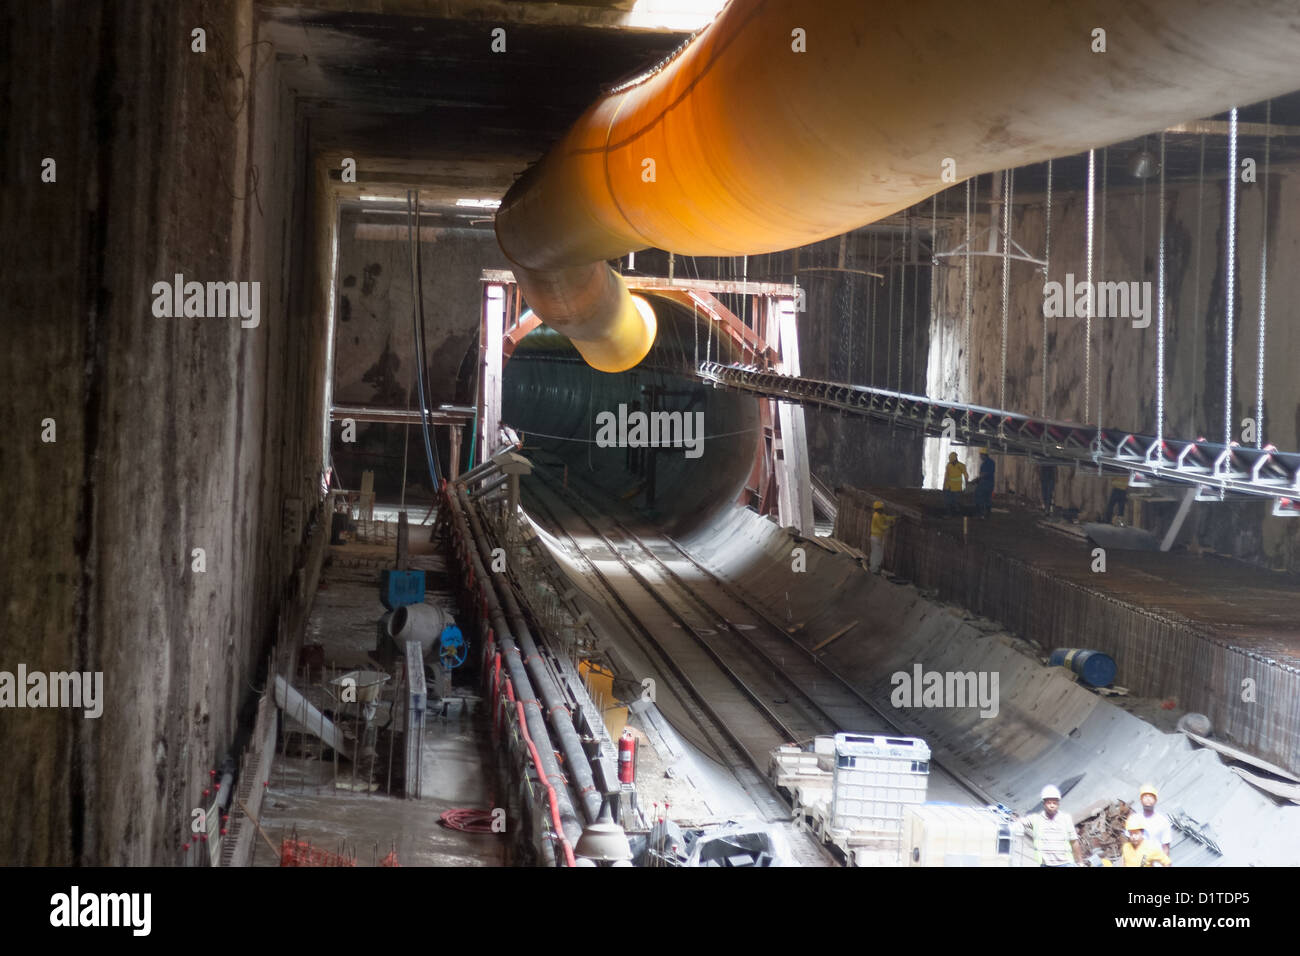 El metro de Panama (Panama subway)  costruction site Stock Photo